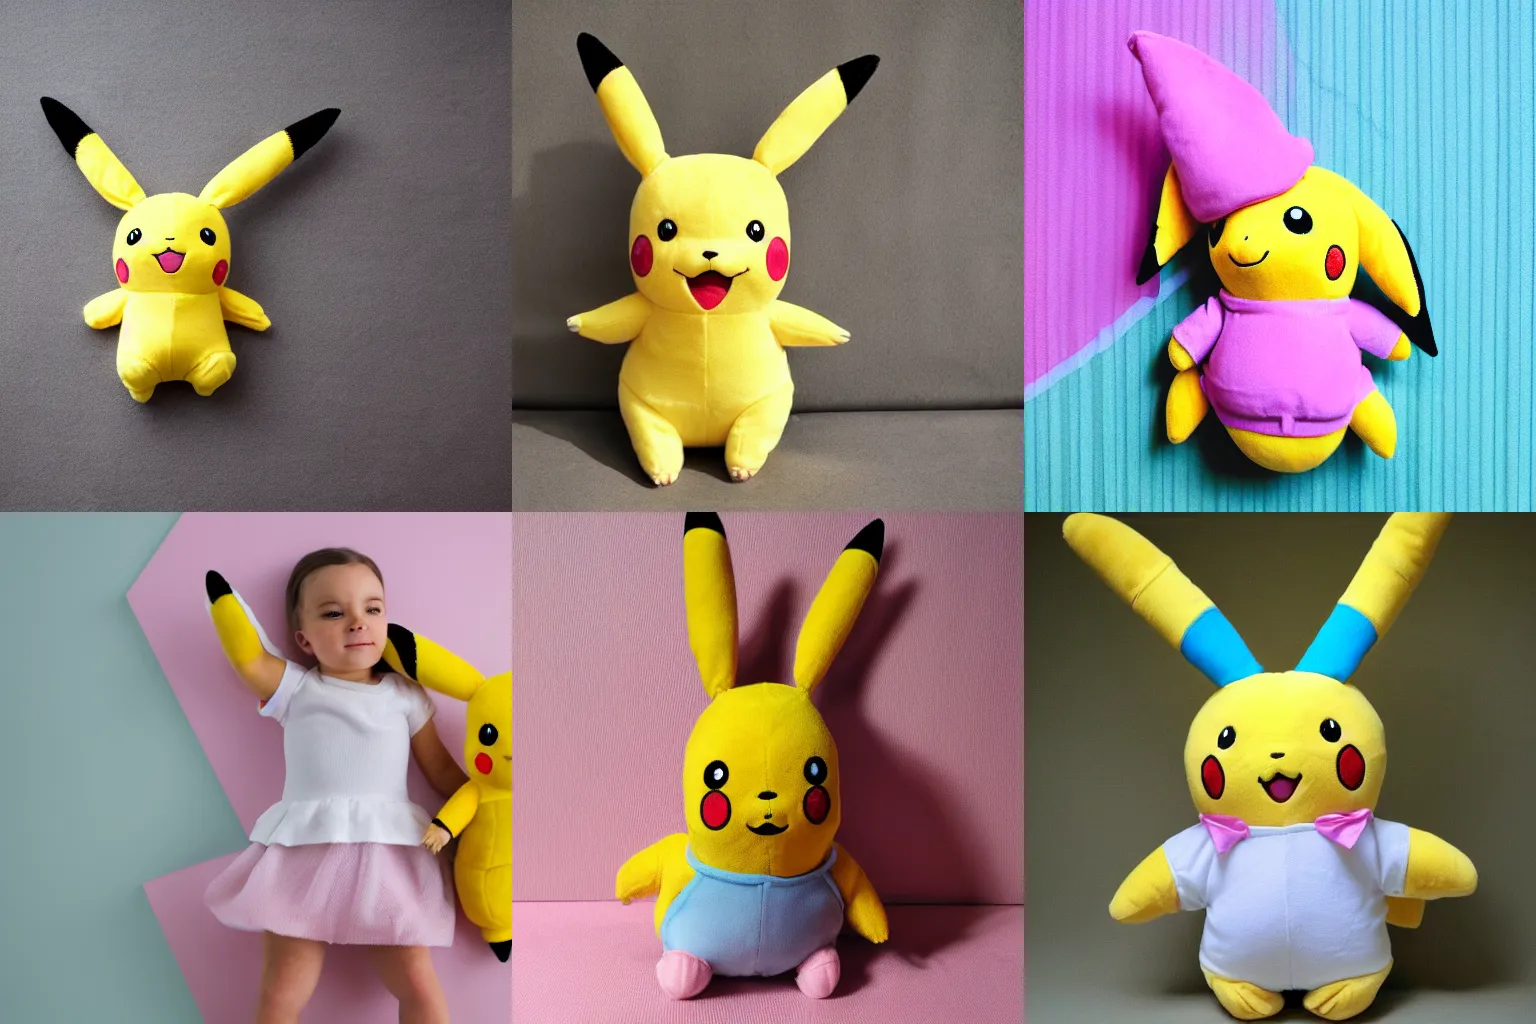 Prompt: Full length portrait of cute plush pikachu in pastel colors, photo